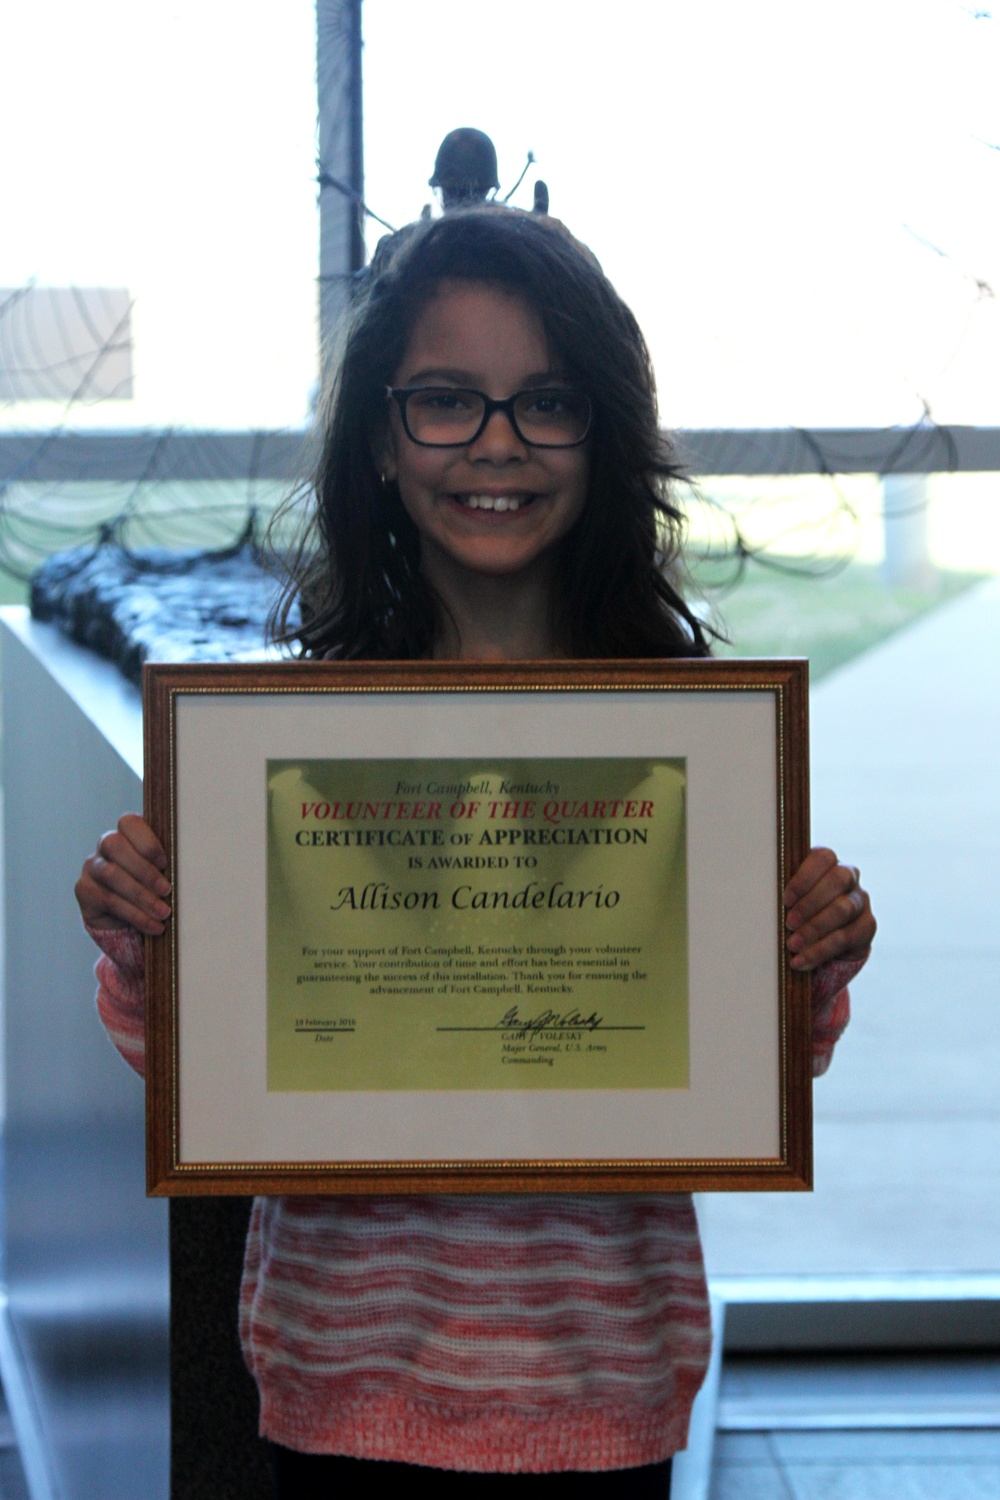 Fourth grade 'Lifeliner' receives award